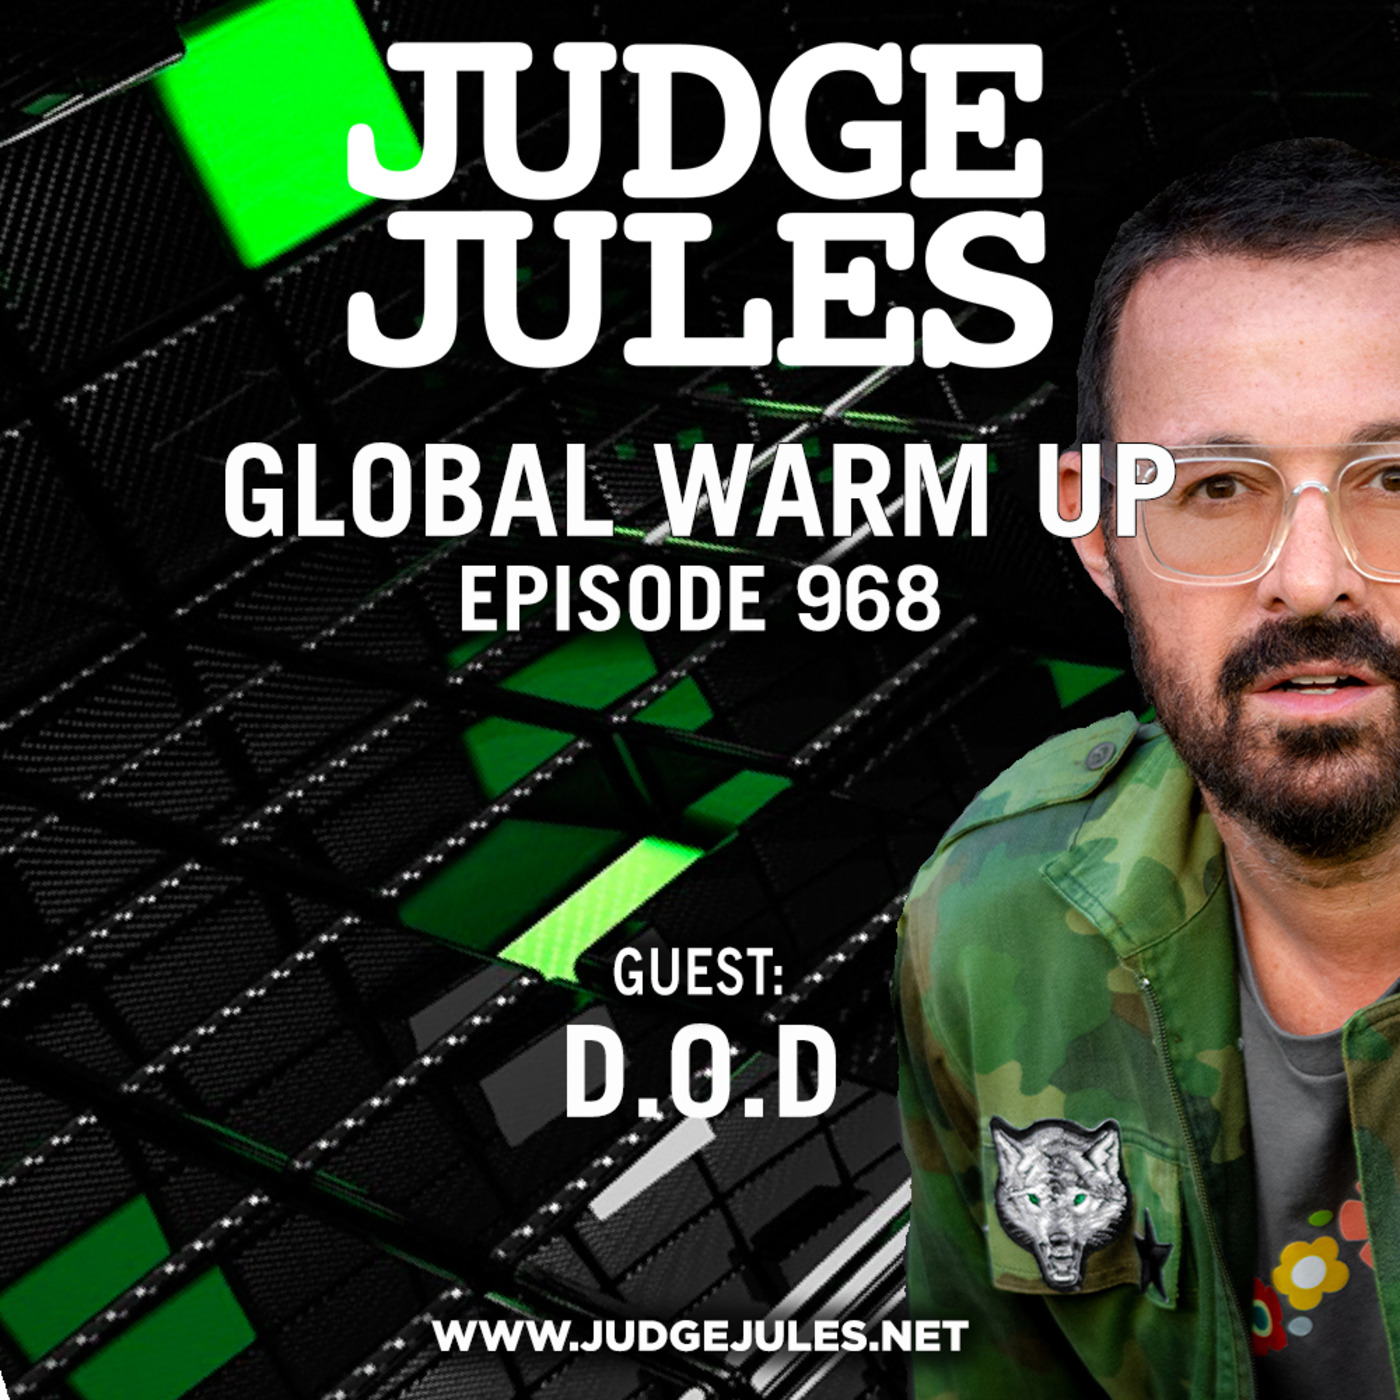 Episode 968: JUDGE JULES PRESENTS THE GLOBAL WARM UP EPISODE 968